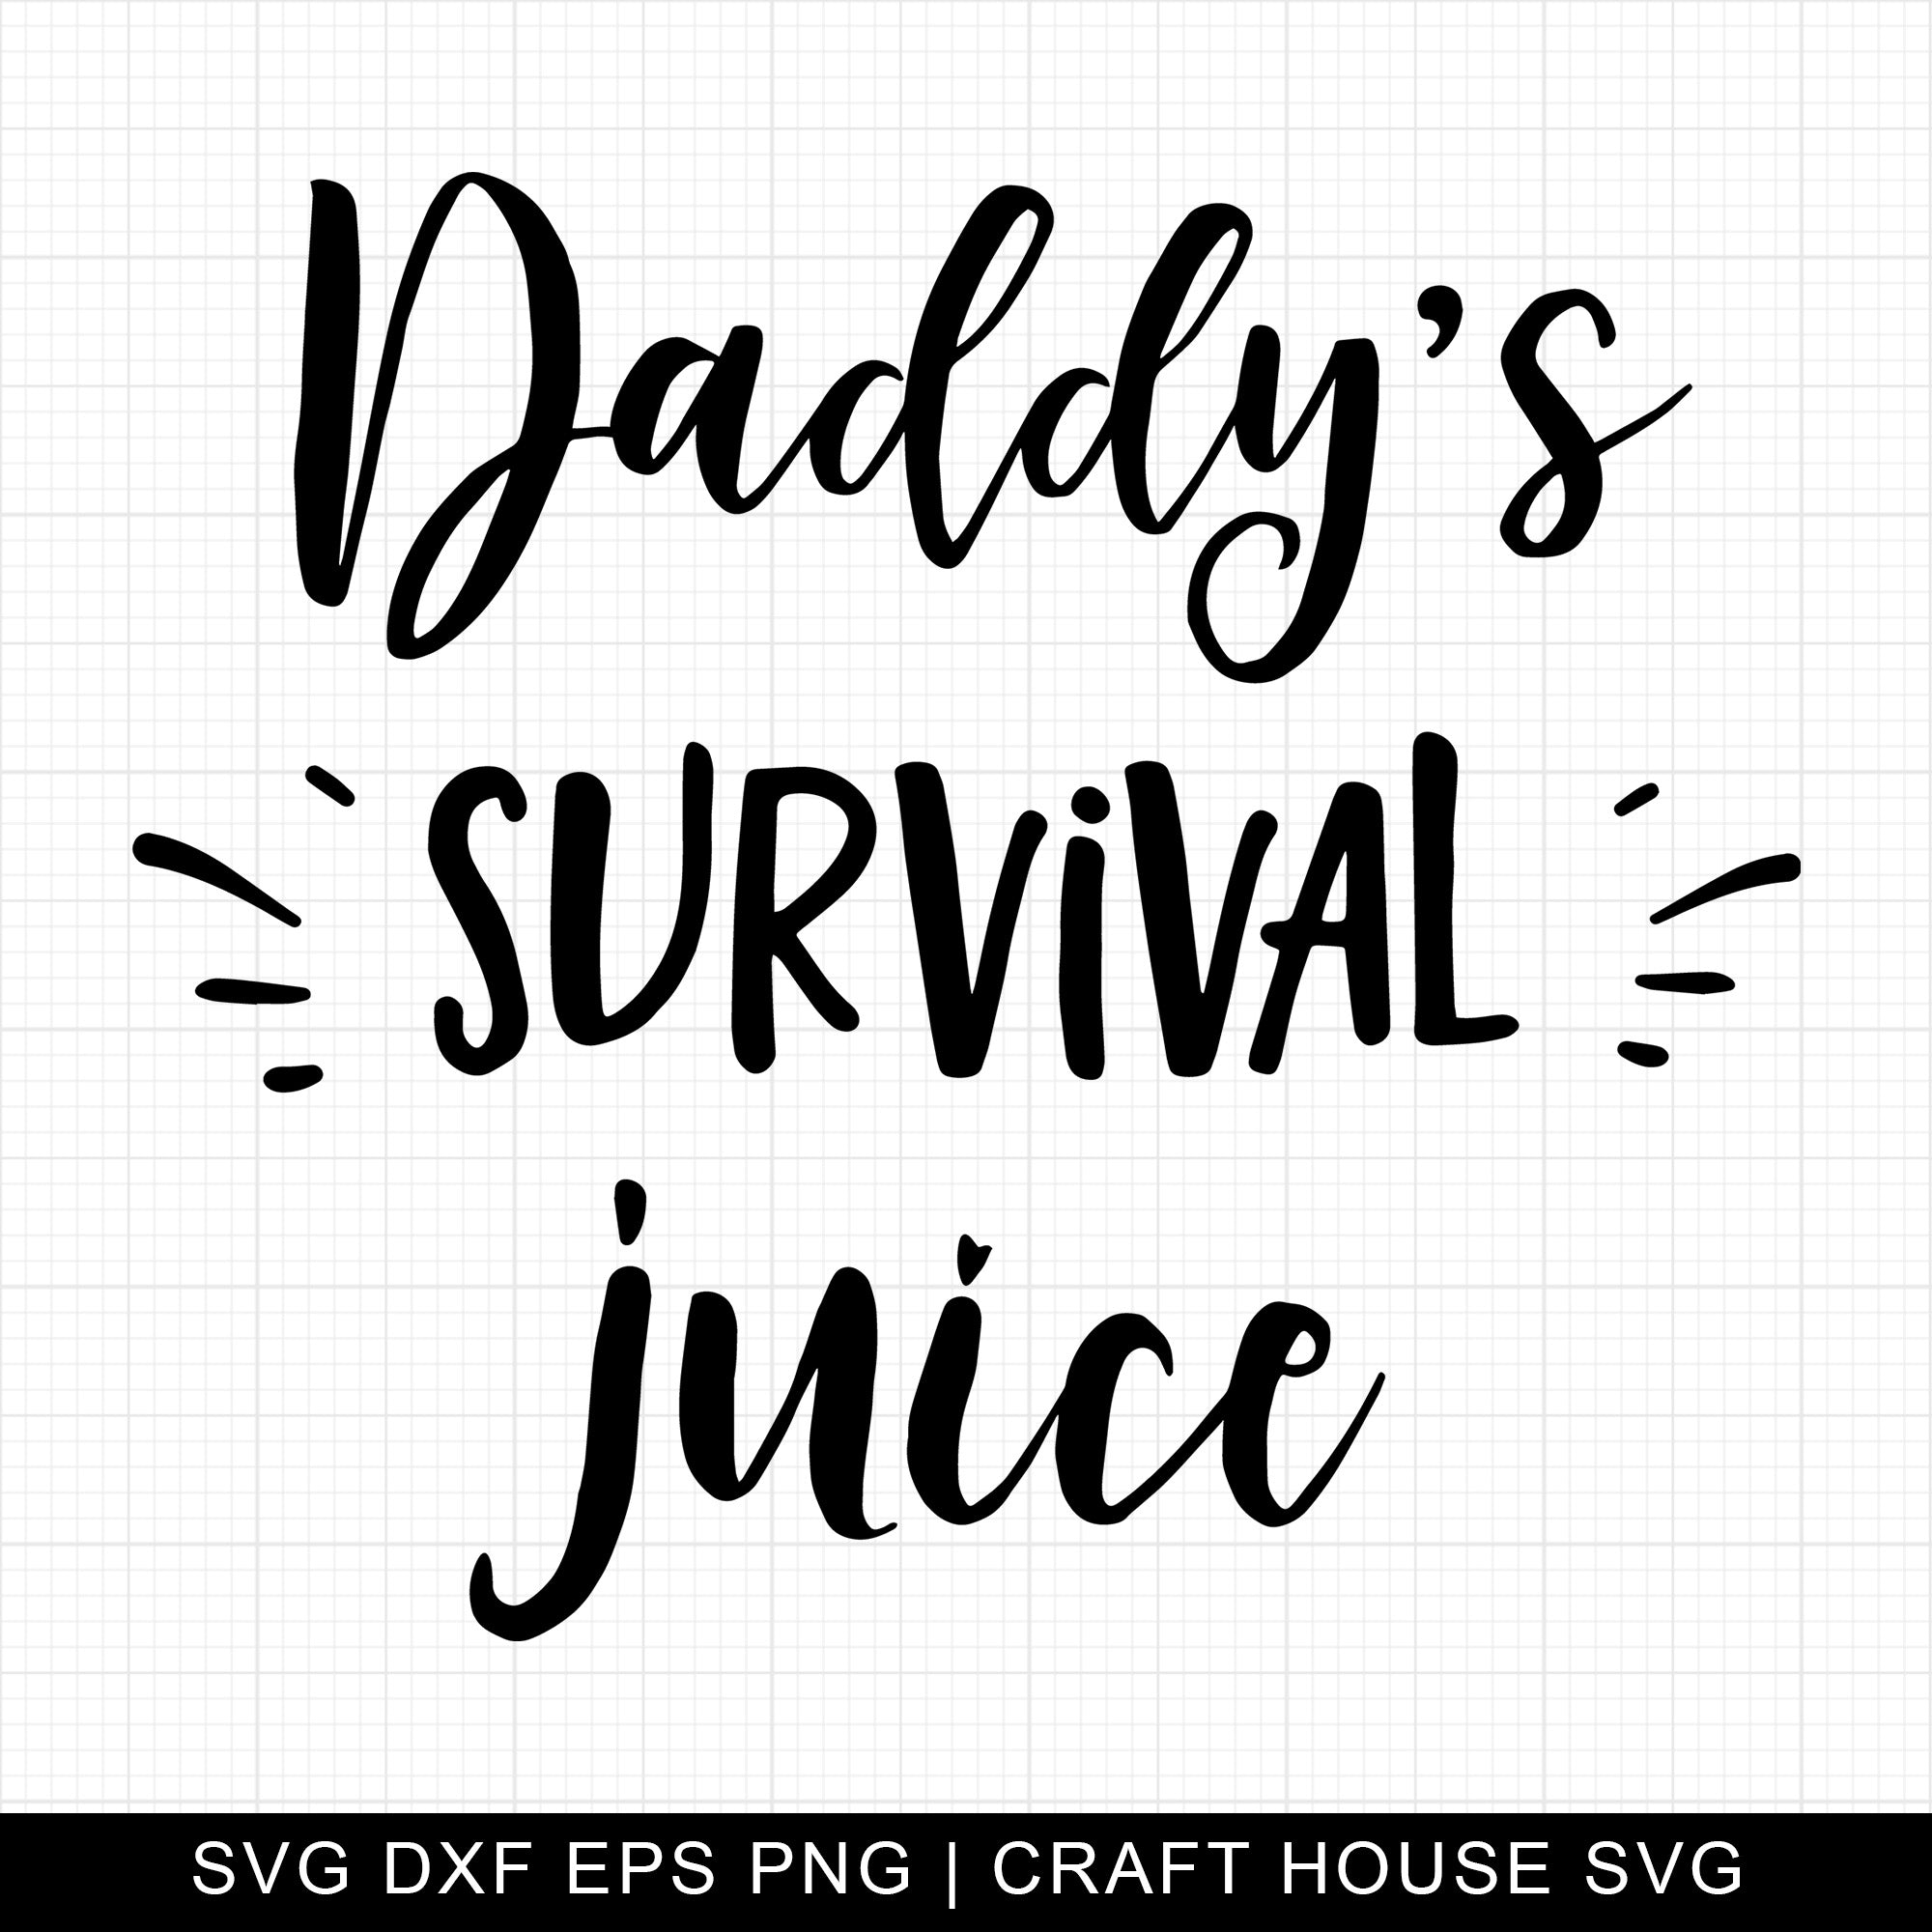 Daddys Survival Juice SVG | M7F4